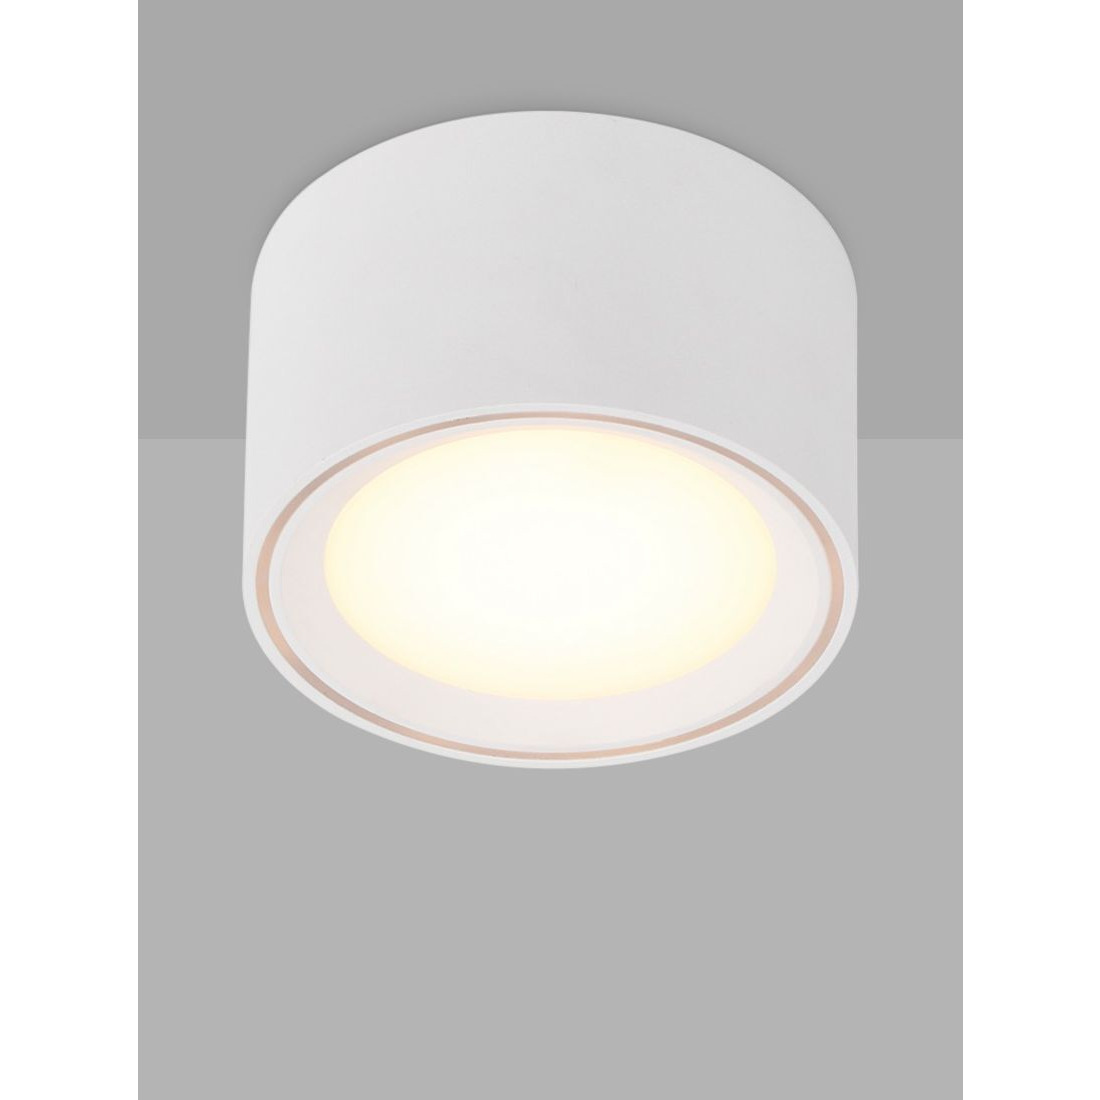 Nordlux Falon Ceiling Spotlight, Pack of 3, White - image 1